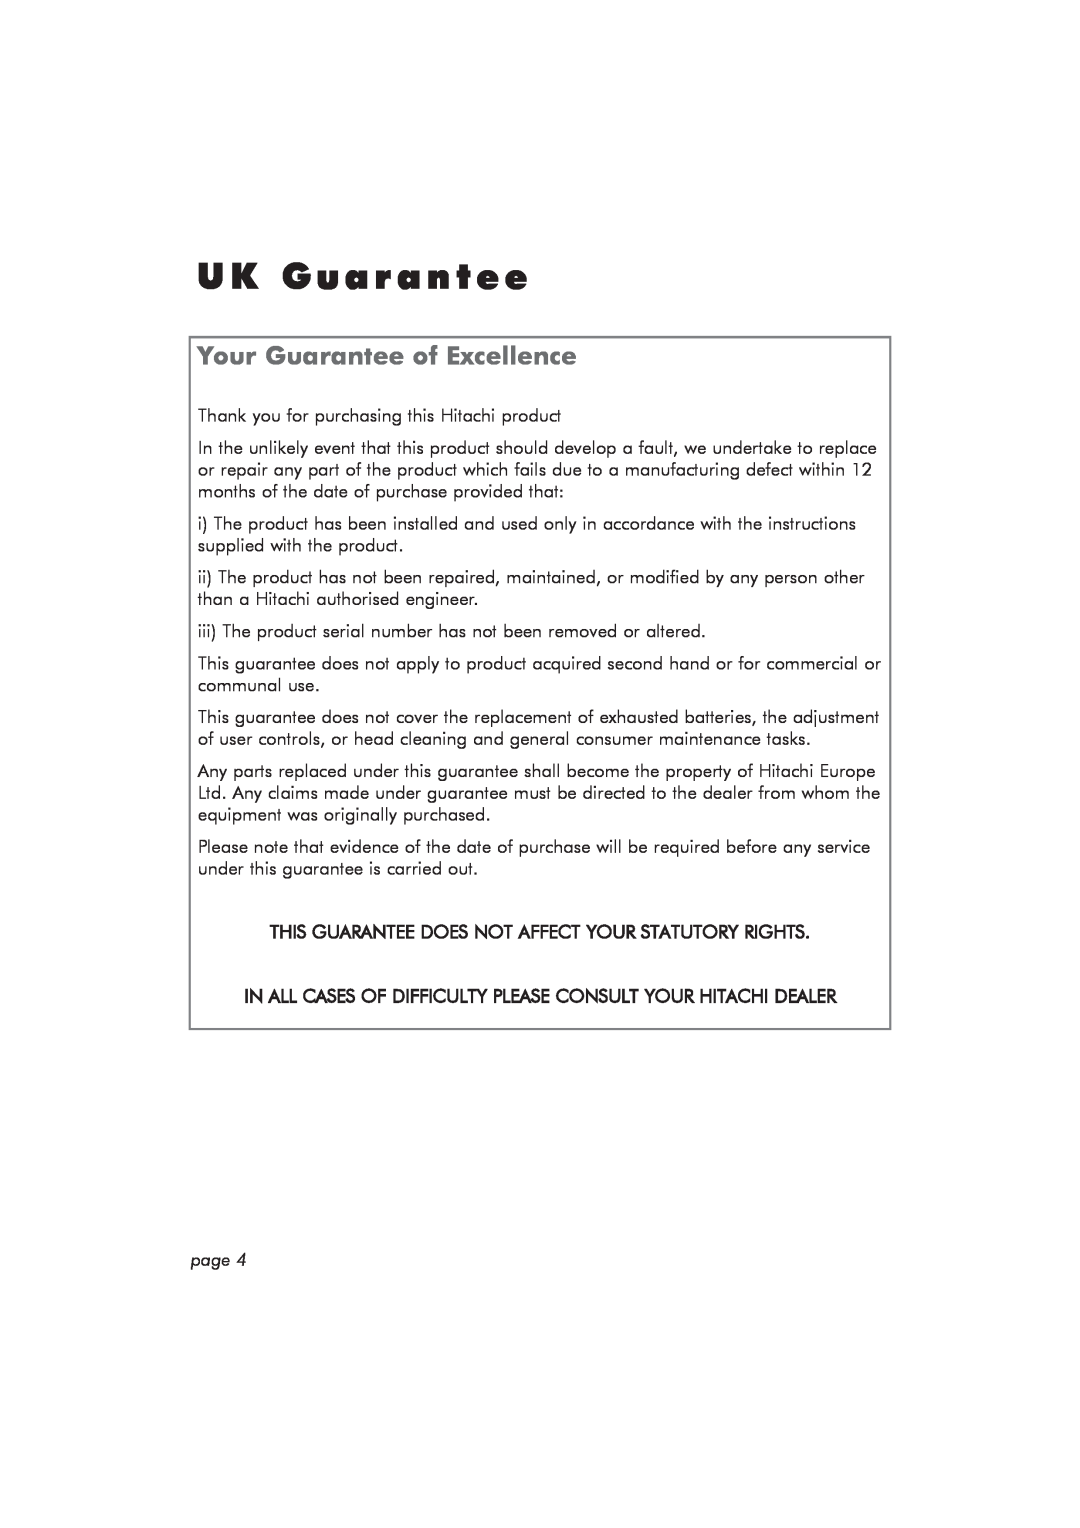 Hitachi TRK100DAB manual UK Guarantee, Your Guarantee of Excellence 